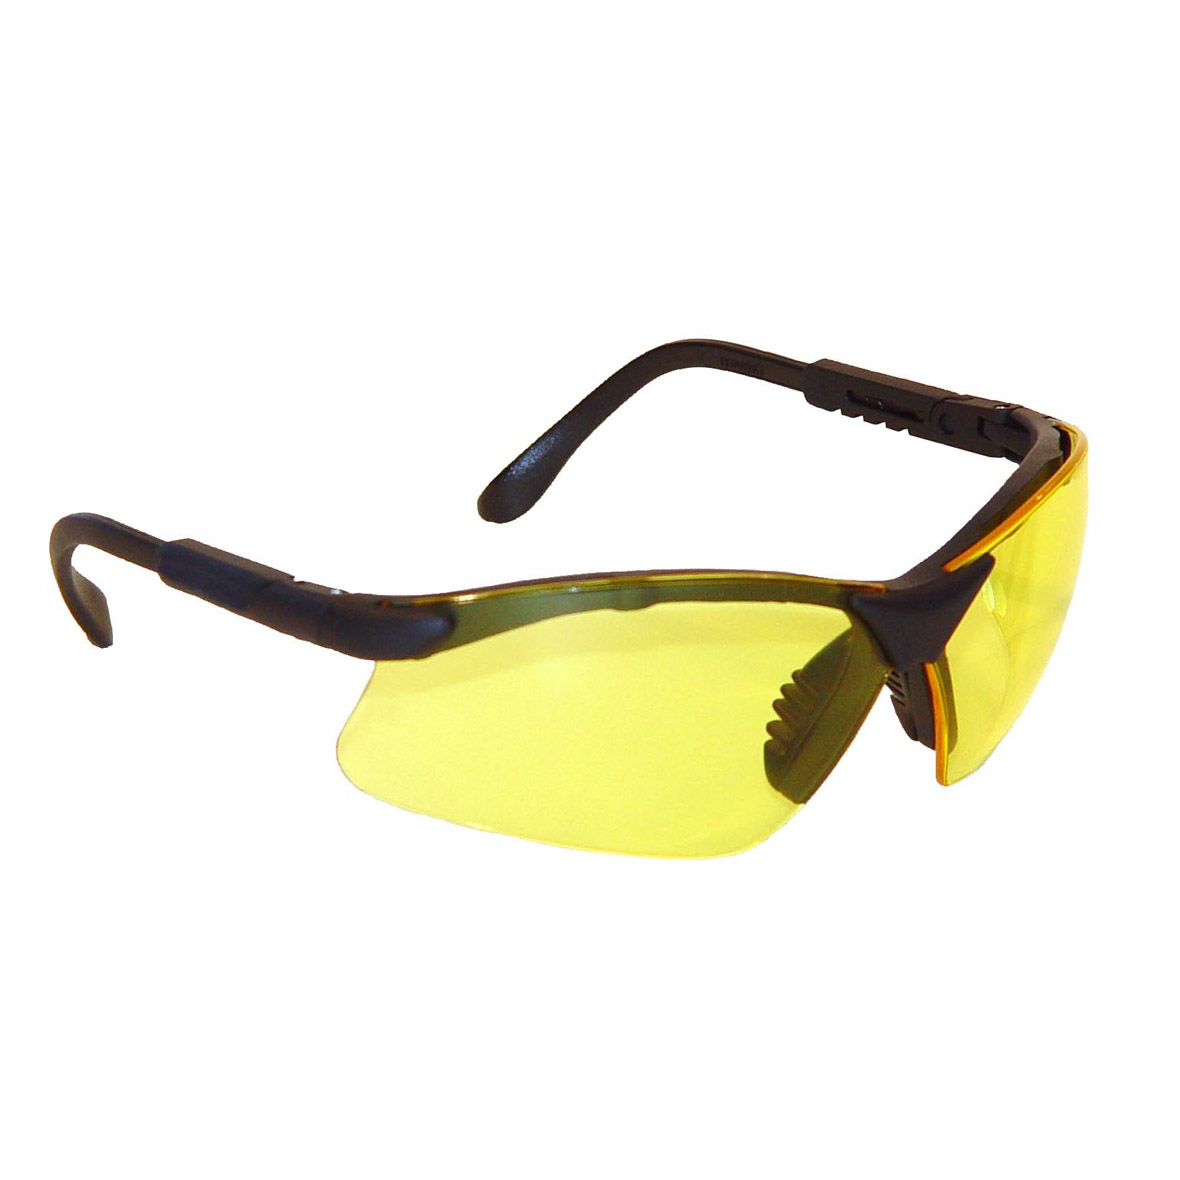 Revelation™ Safety Eyewear - Black Frame - Amber Lens - Tinted Lens